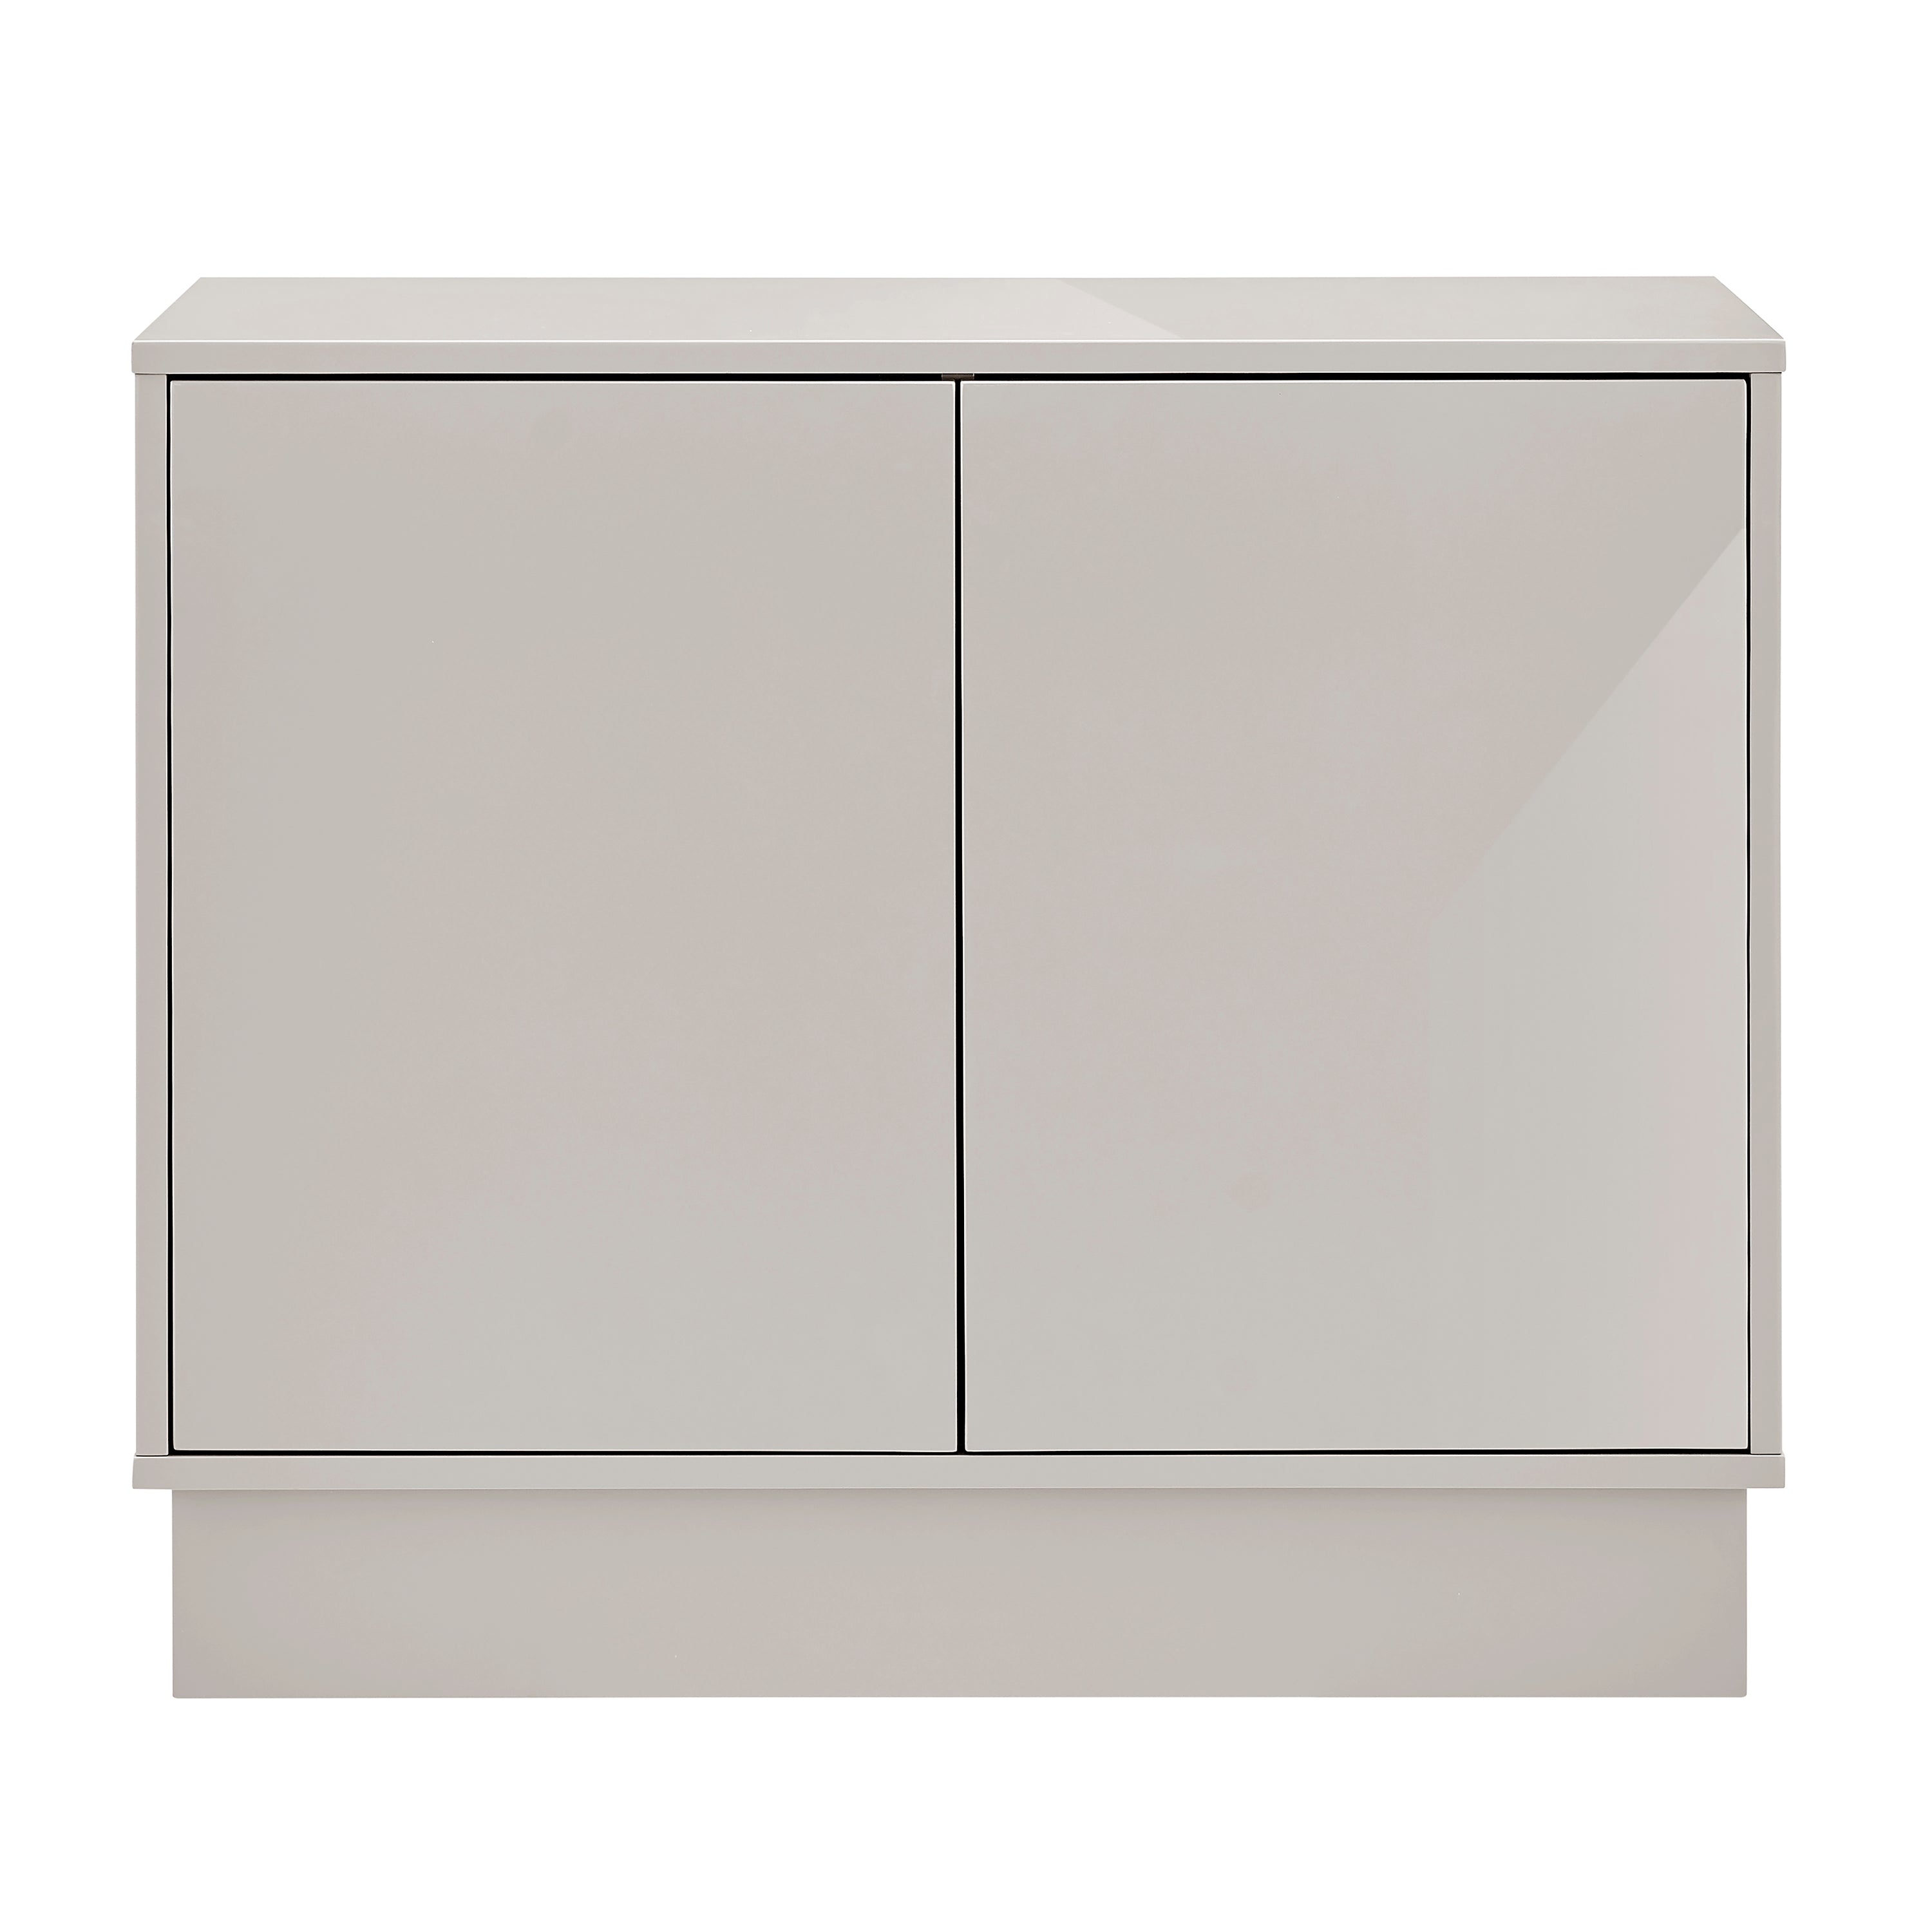 Euro Style Cabinets & Wardrobes - Tresero Cabinet in High Gloss Warm Gray